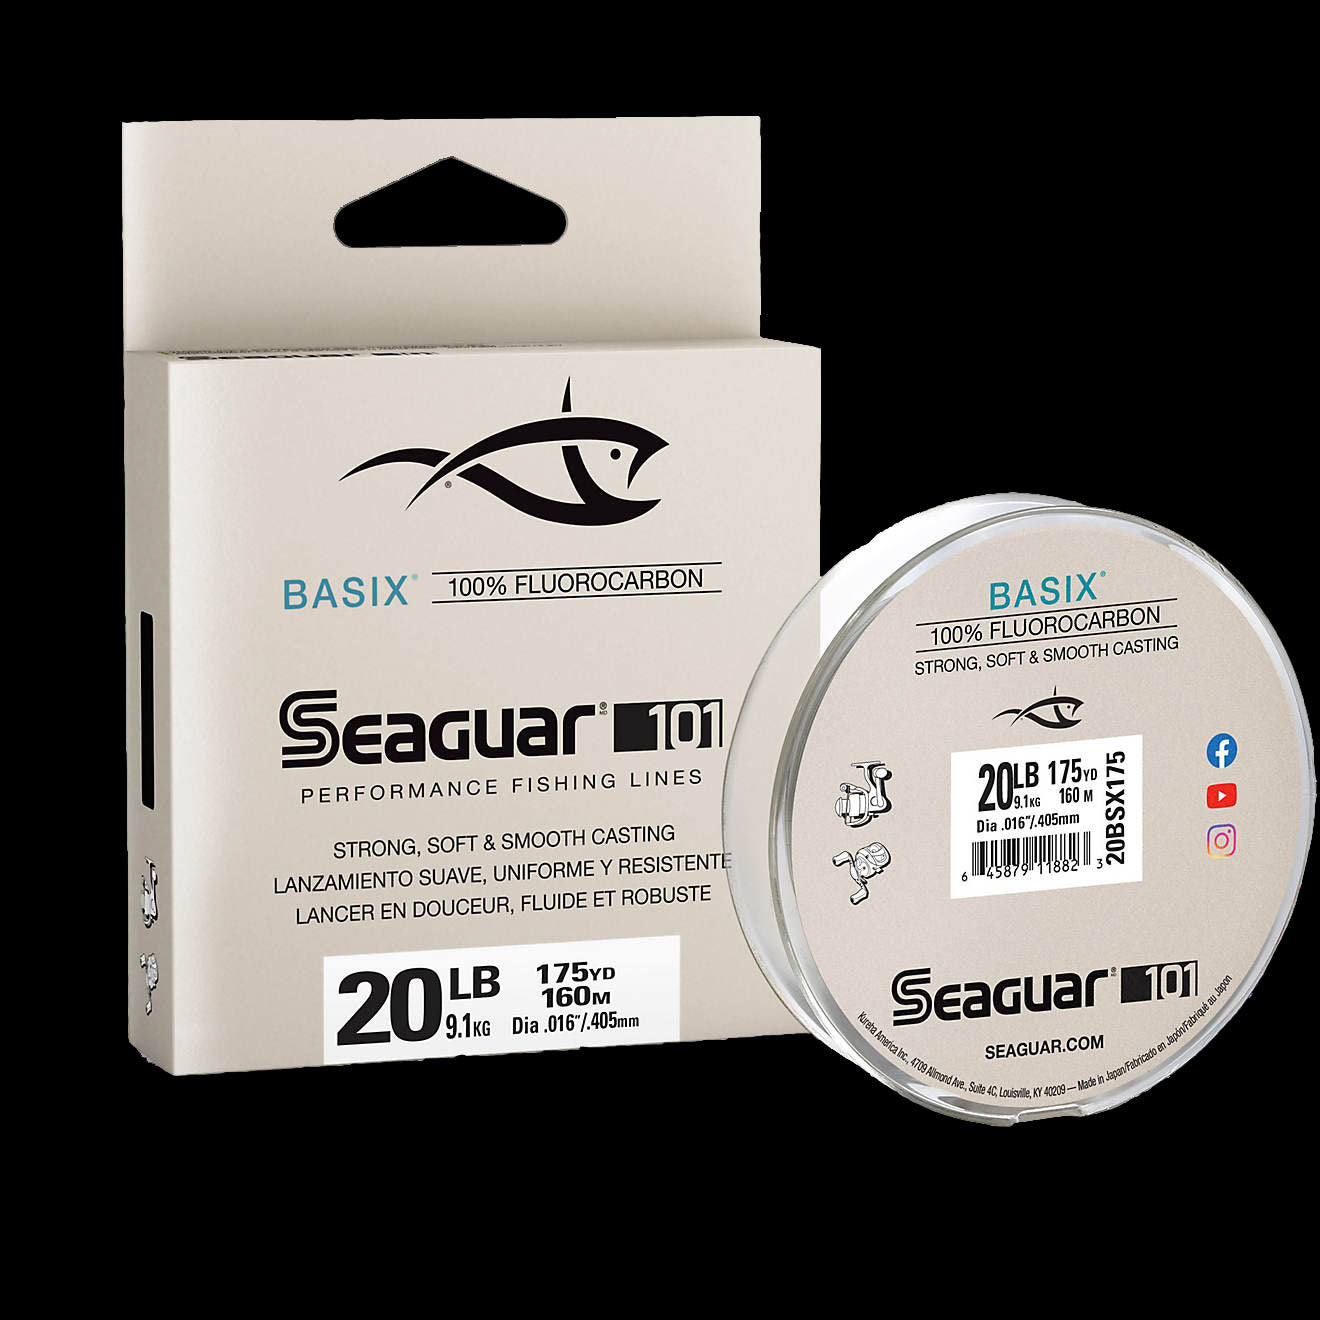 Seaguar 101 BASIX – Anglers Choice Marine Tackle Shop